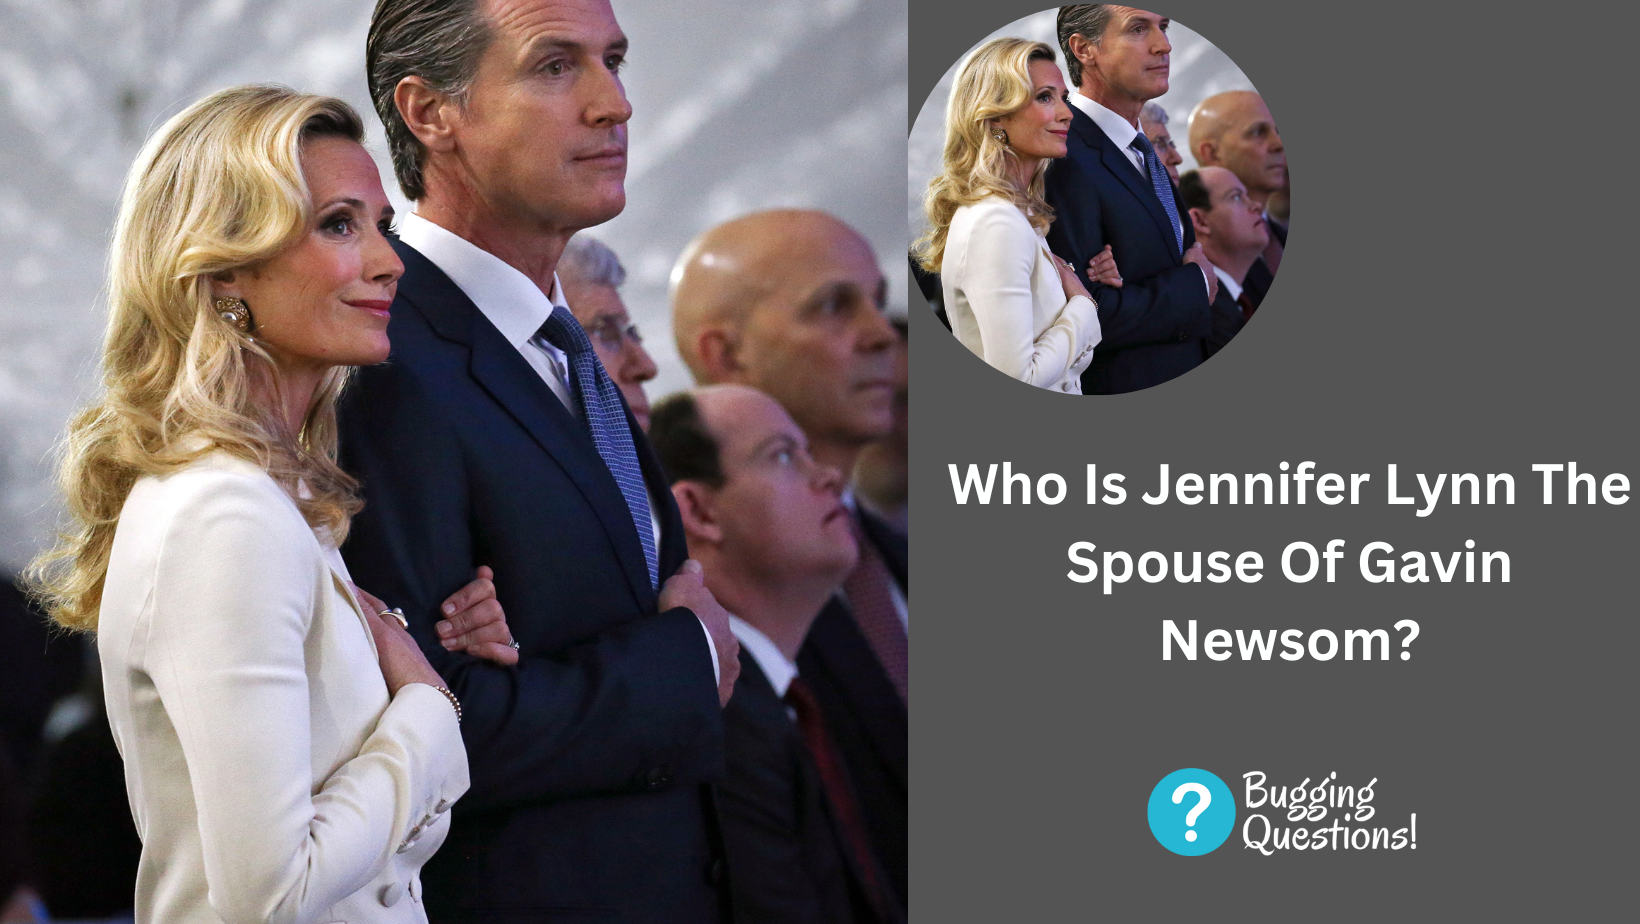 Who Is Jennifer Lynn The Spouse Of Gavin Newsom?